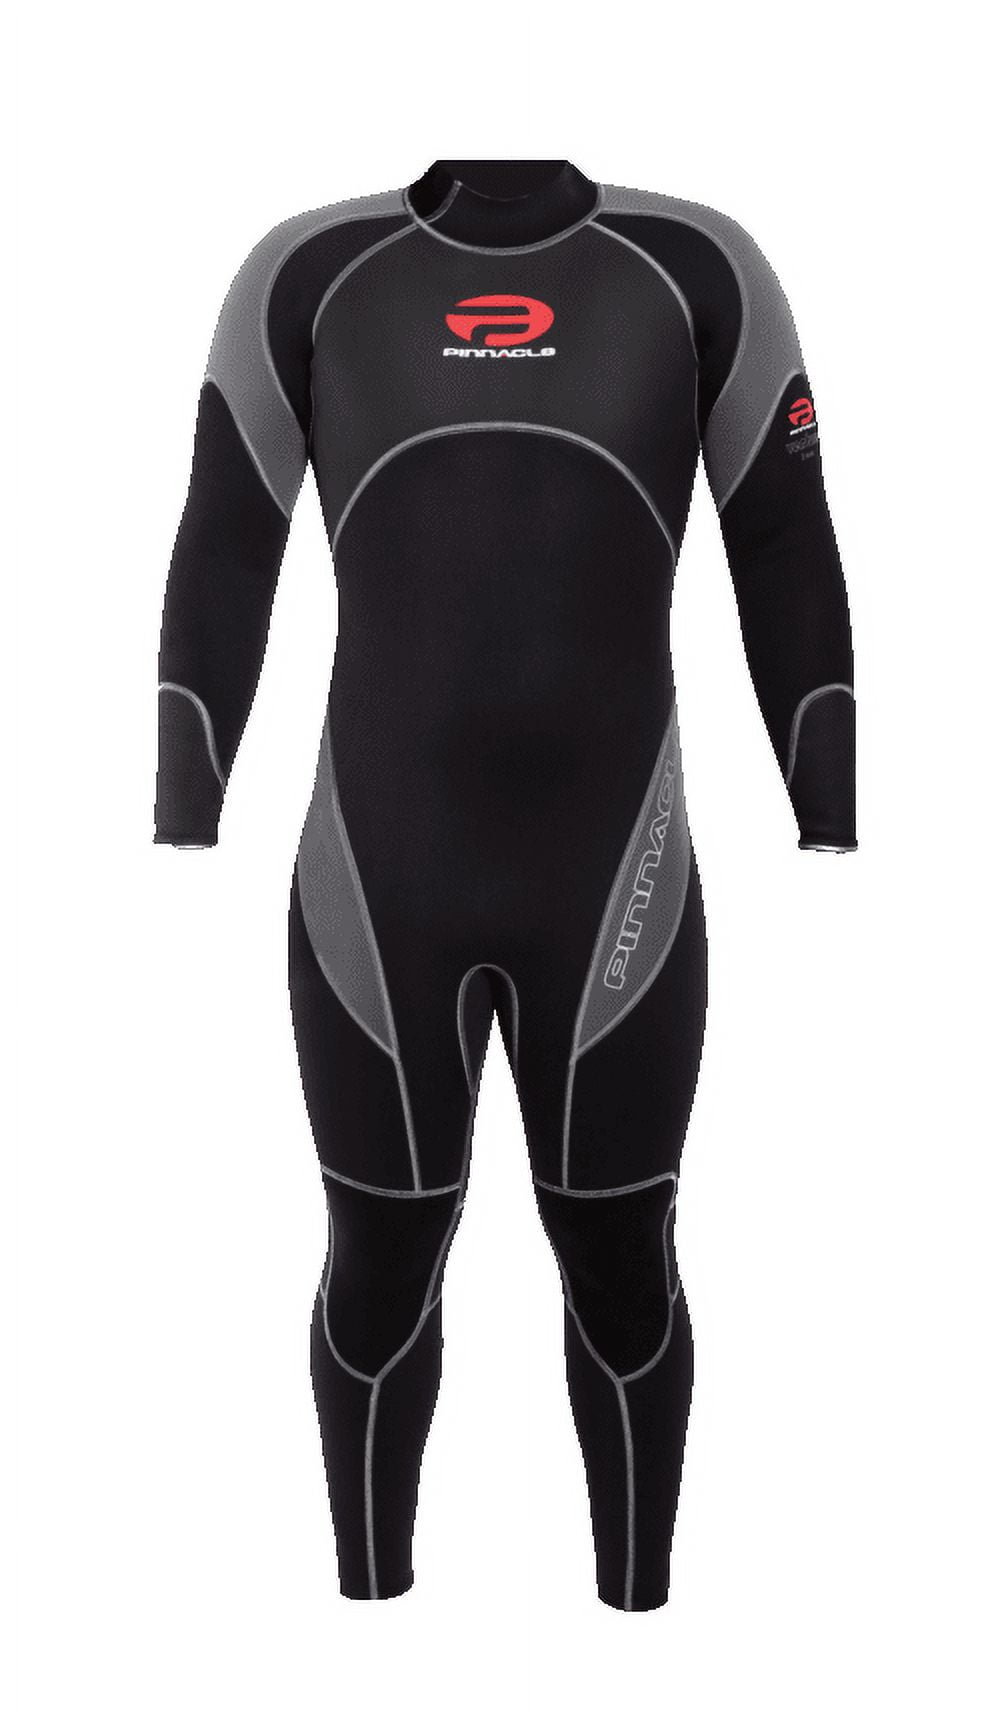 Premium Neoprene Wetsuit Vest for Swimming and Sailing, Thermal Sleeveless  Vest